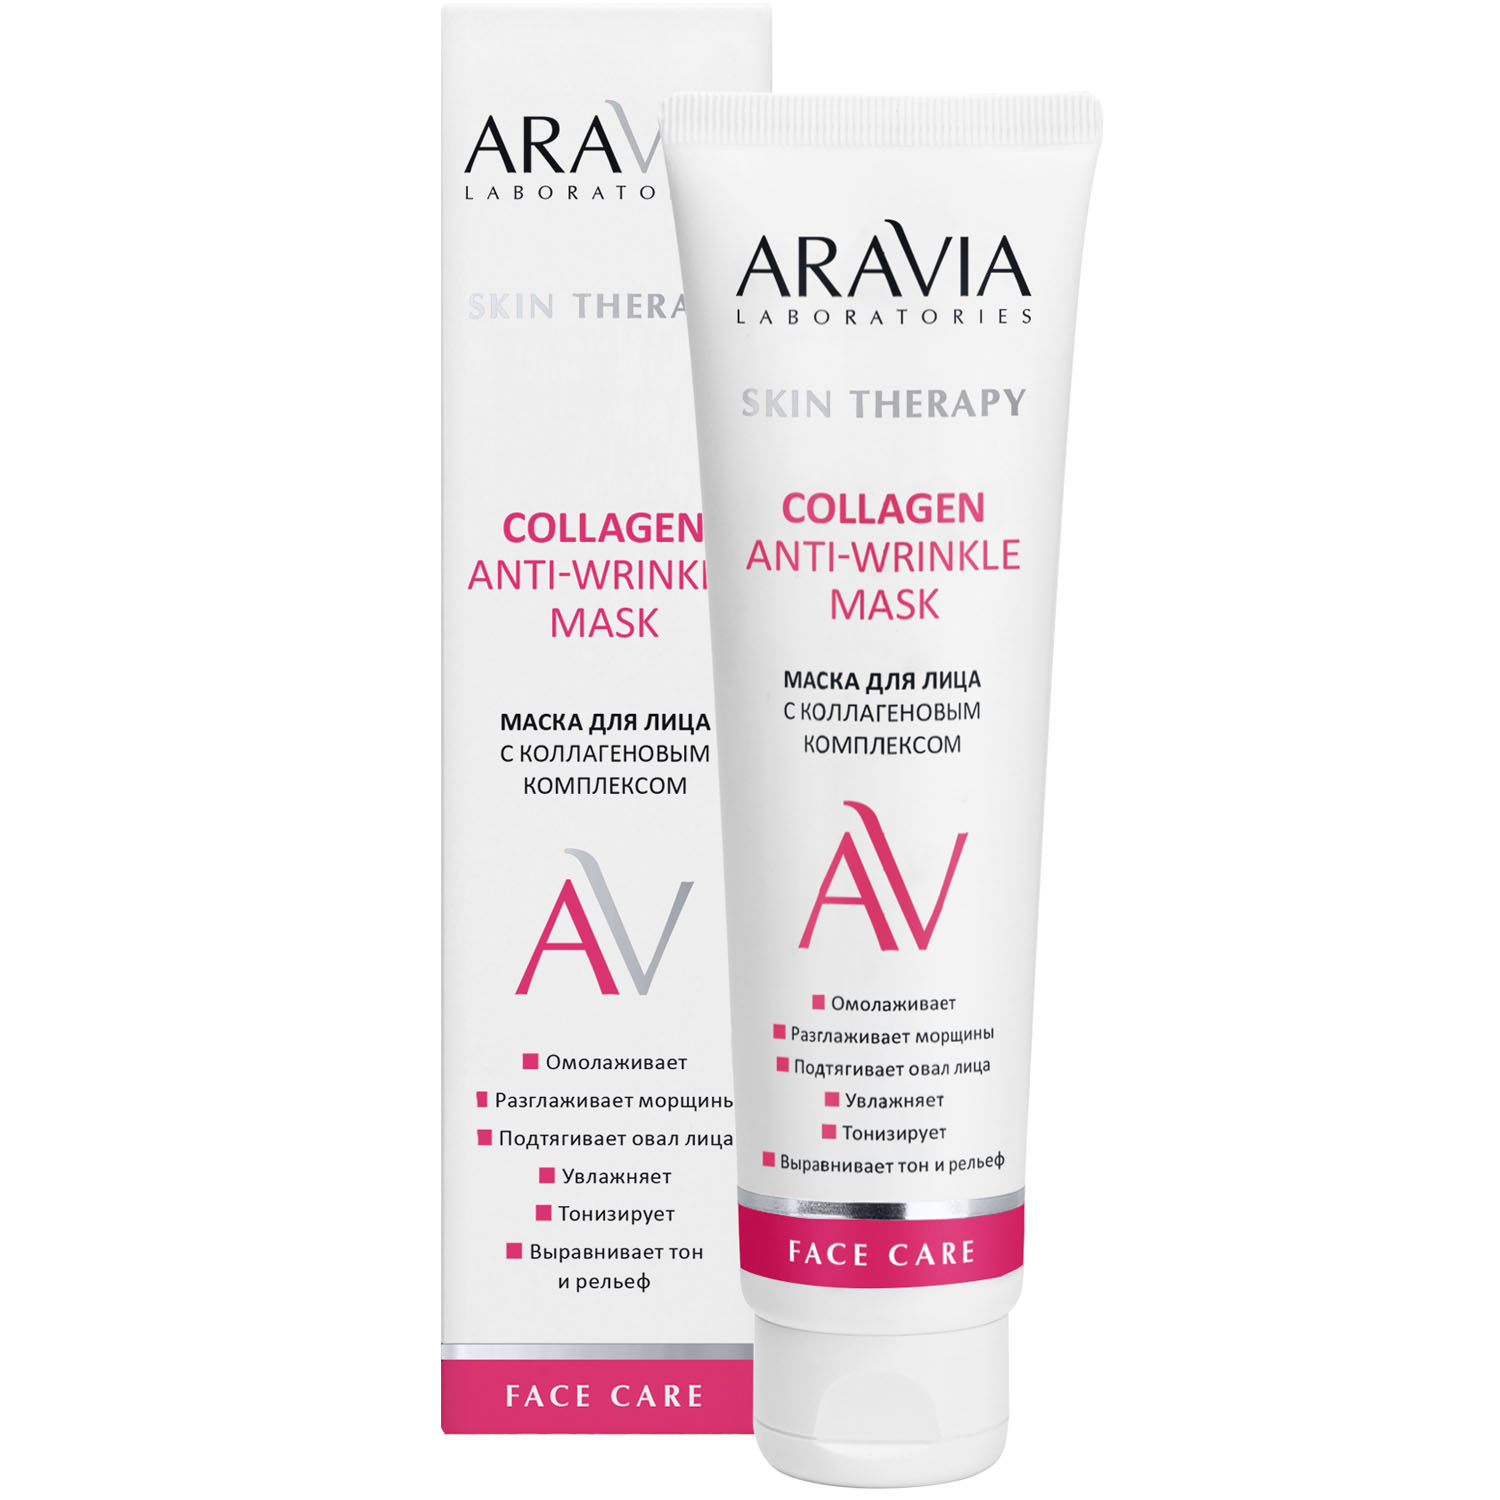 Aravia Laboratories Маска для лица с коллагеновым комплексом Collagen Anti-wrinkle Mask, 100 мл (Aravia Laboratories, Уход за лицом)